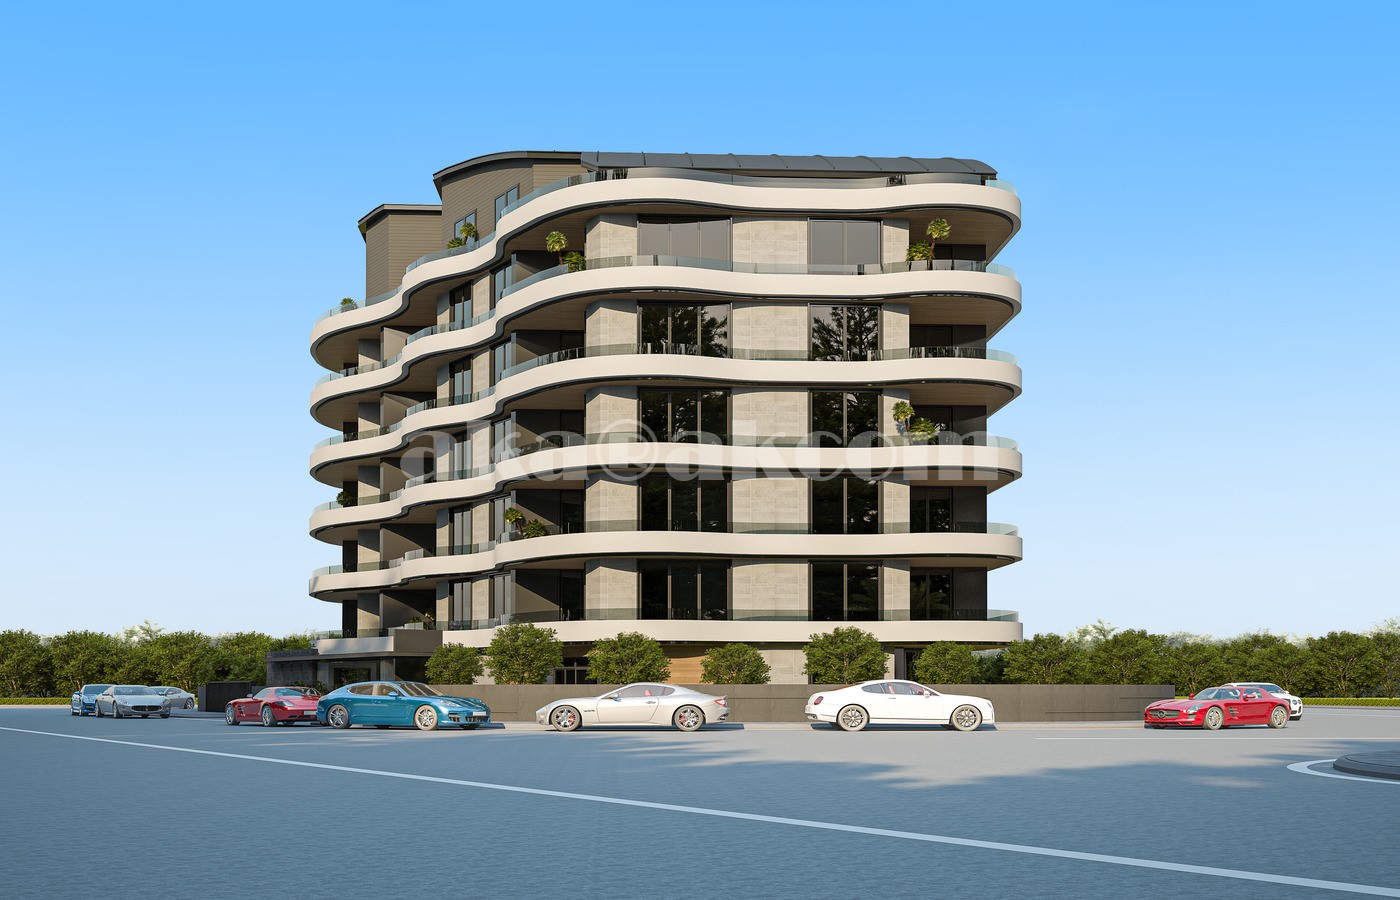 Furnished Apartment For Sale in Antalya Turkey | Akarakcom Real Estate